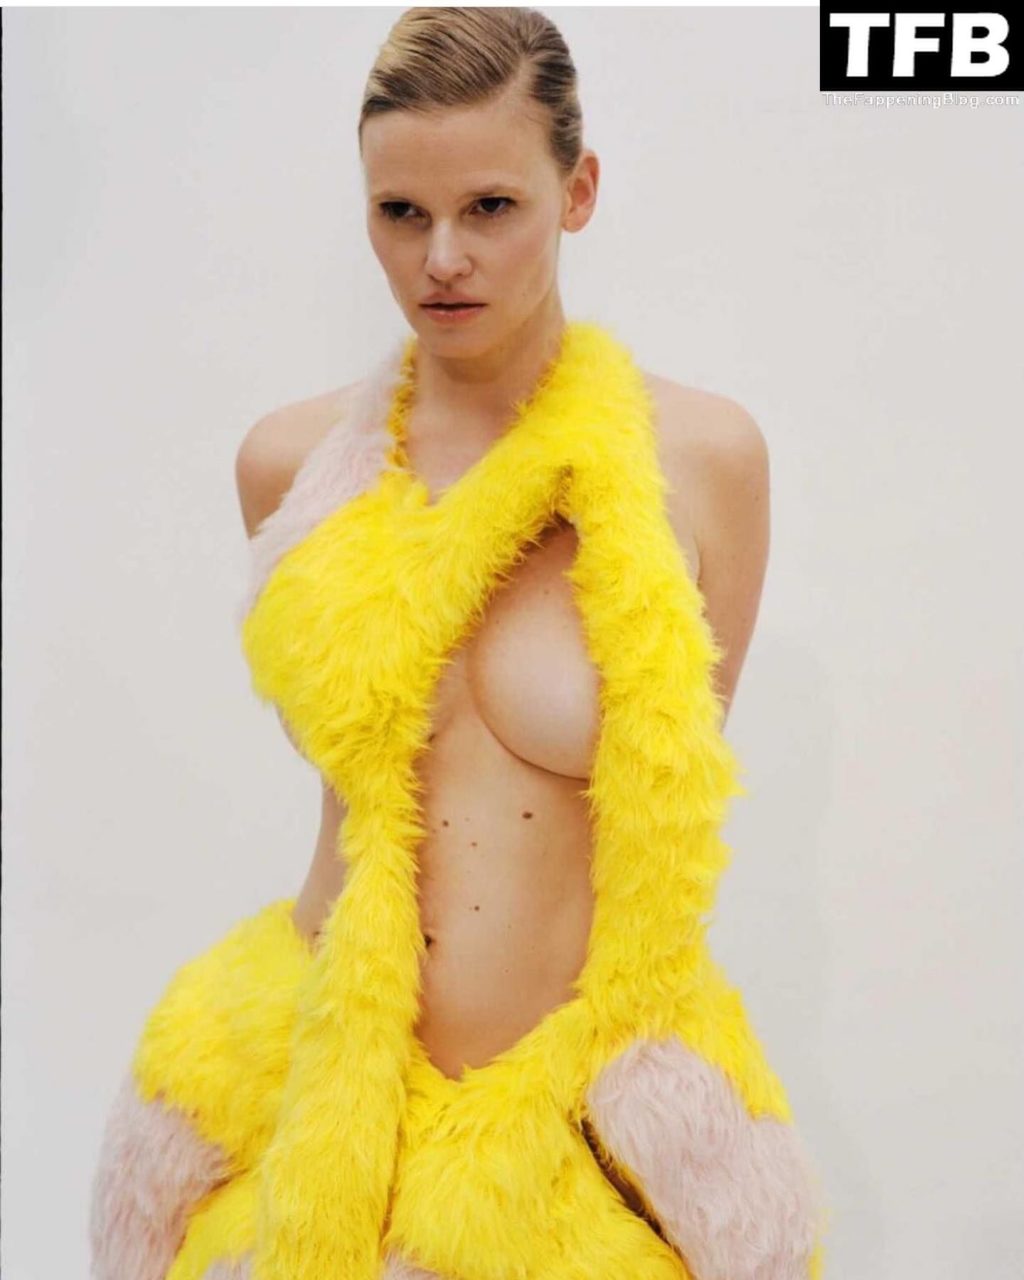 Lara Stone Nude The Fappening Blog 4 1024x1280 - Lara Stone Nude & Sexy Collection (60 Photos)